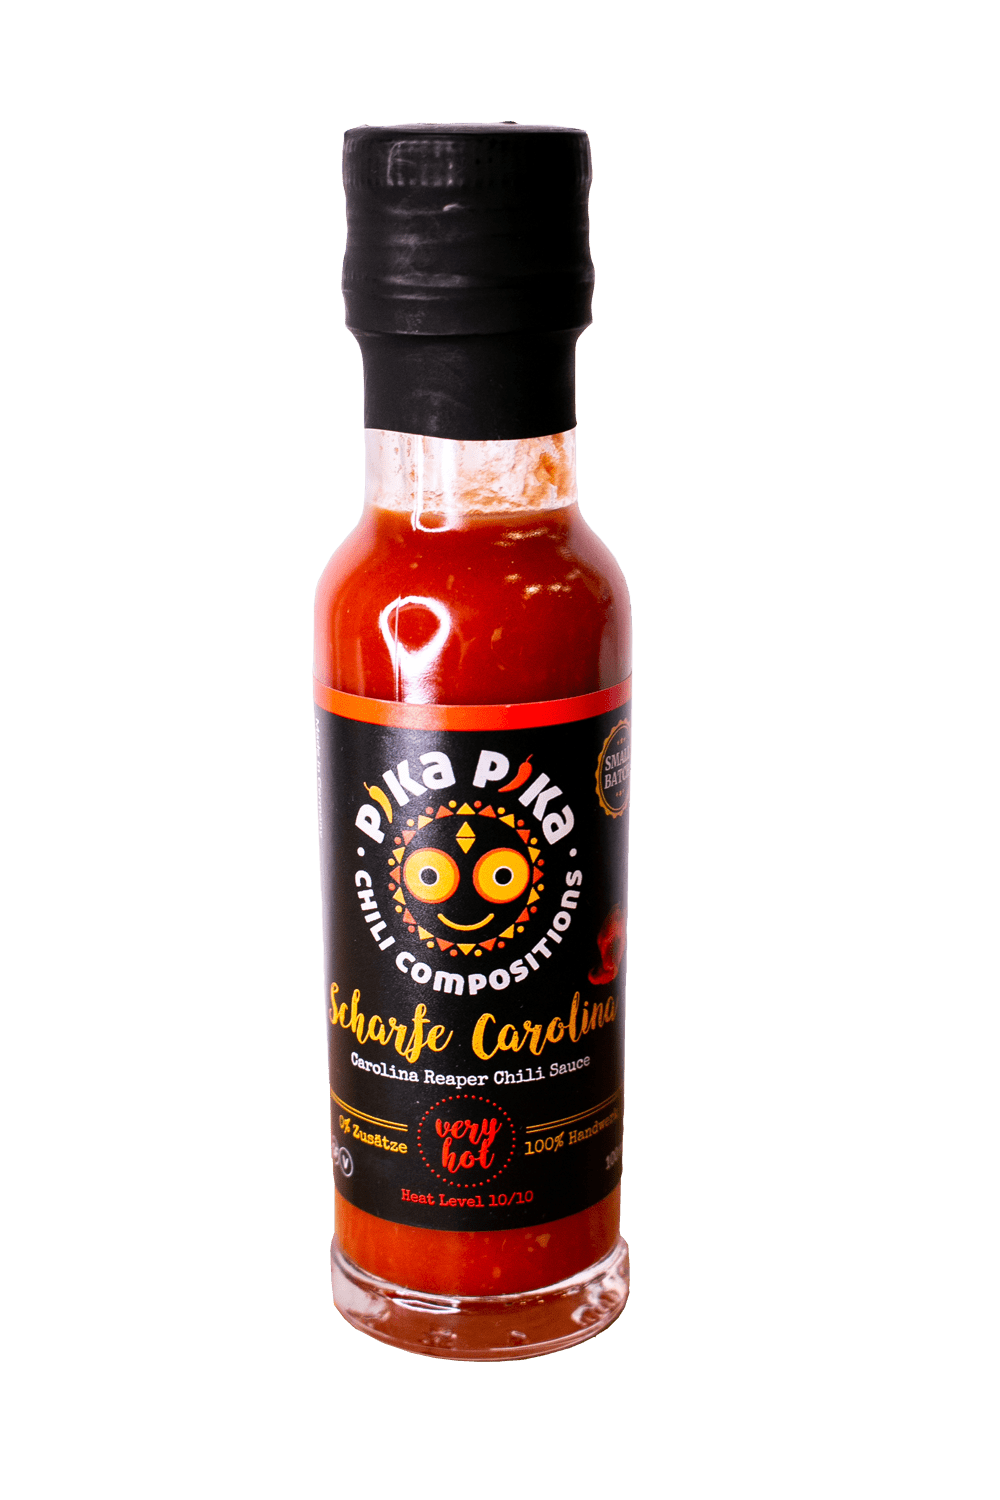 Die scharfe Carolina // Carolina Reaper Chili Sauce // Pika Pika Chili ...